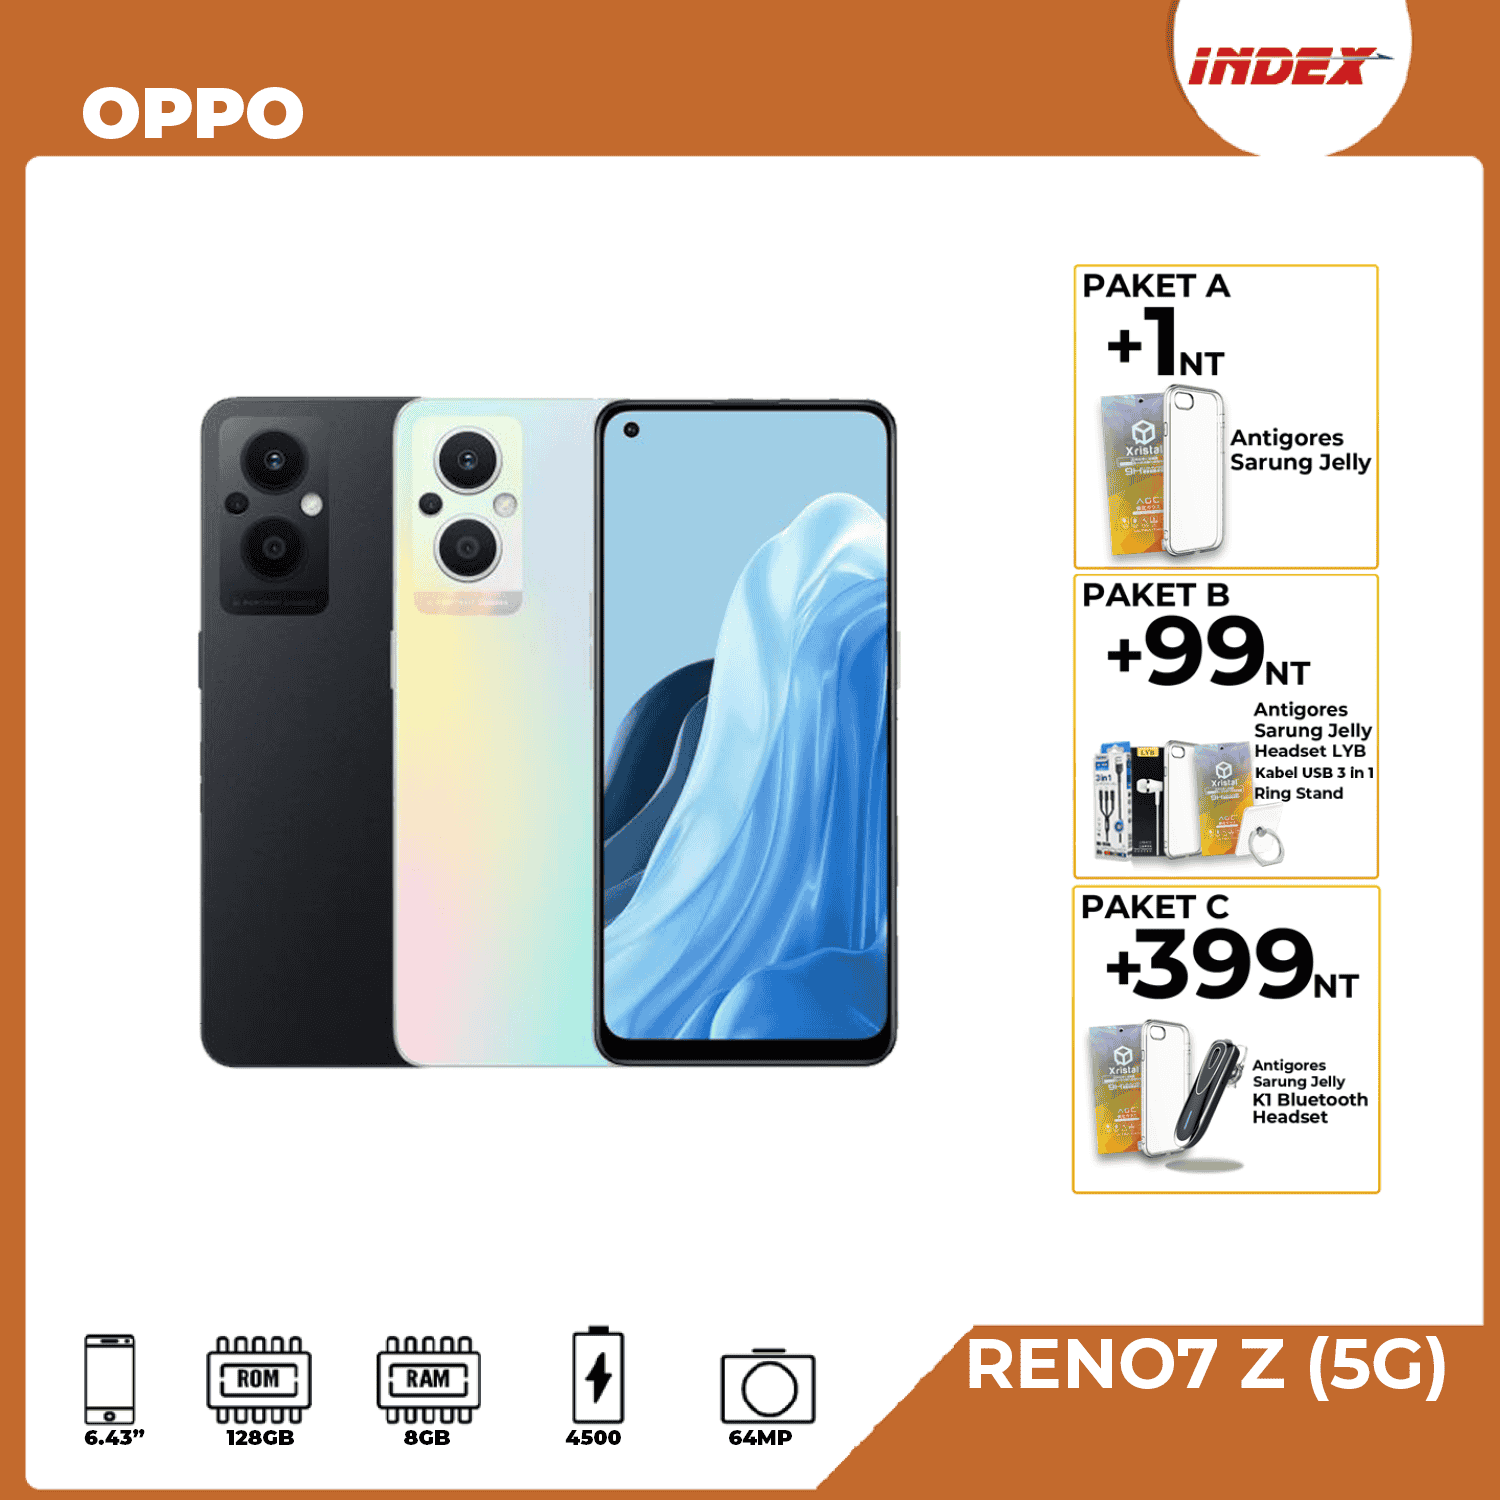 OPPO RENO7 Z (5G) 8GB/128GB